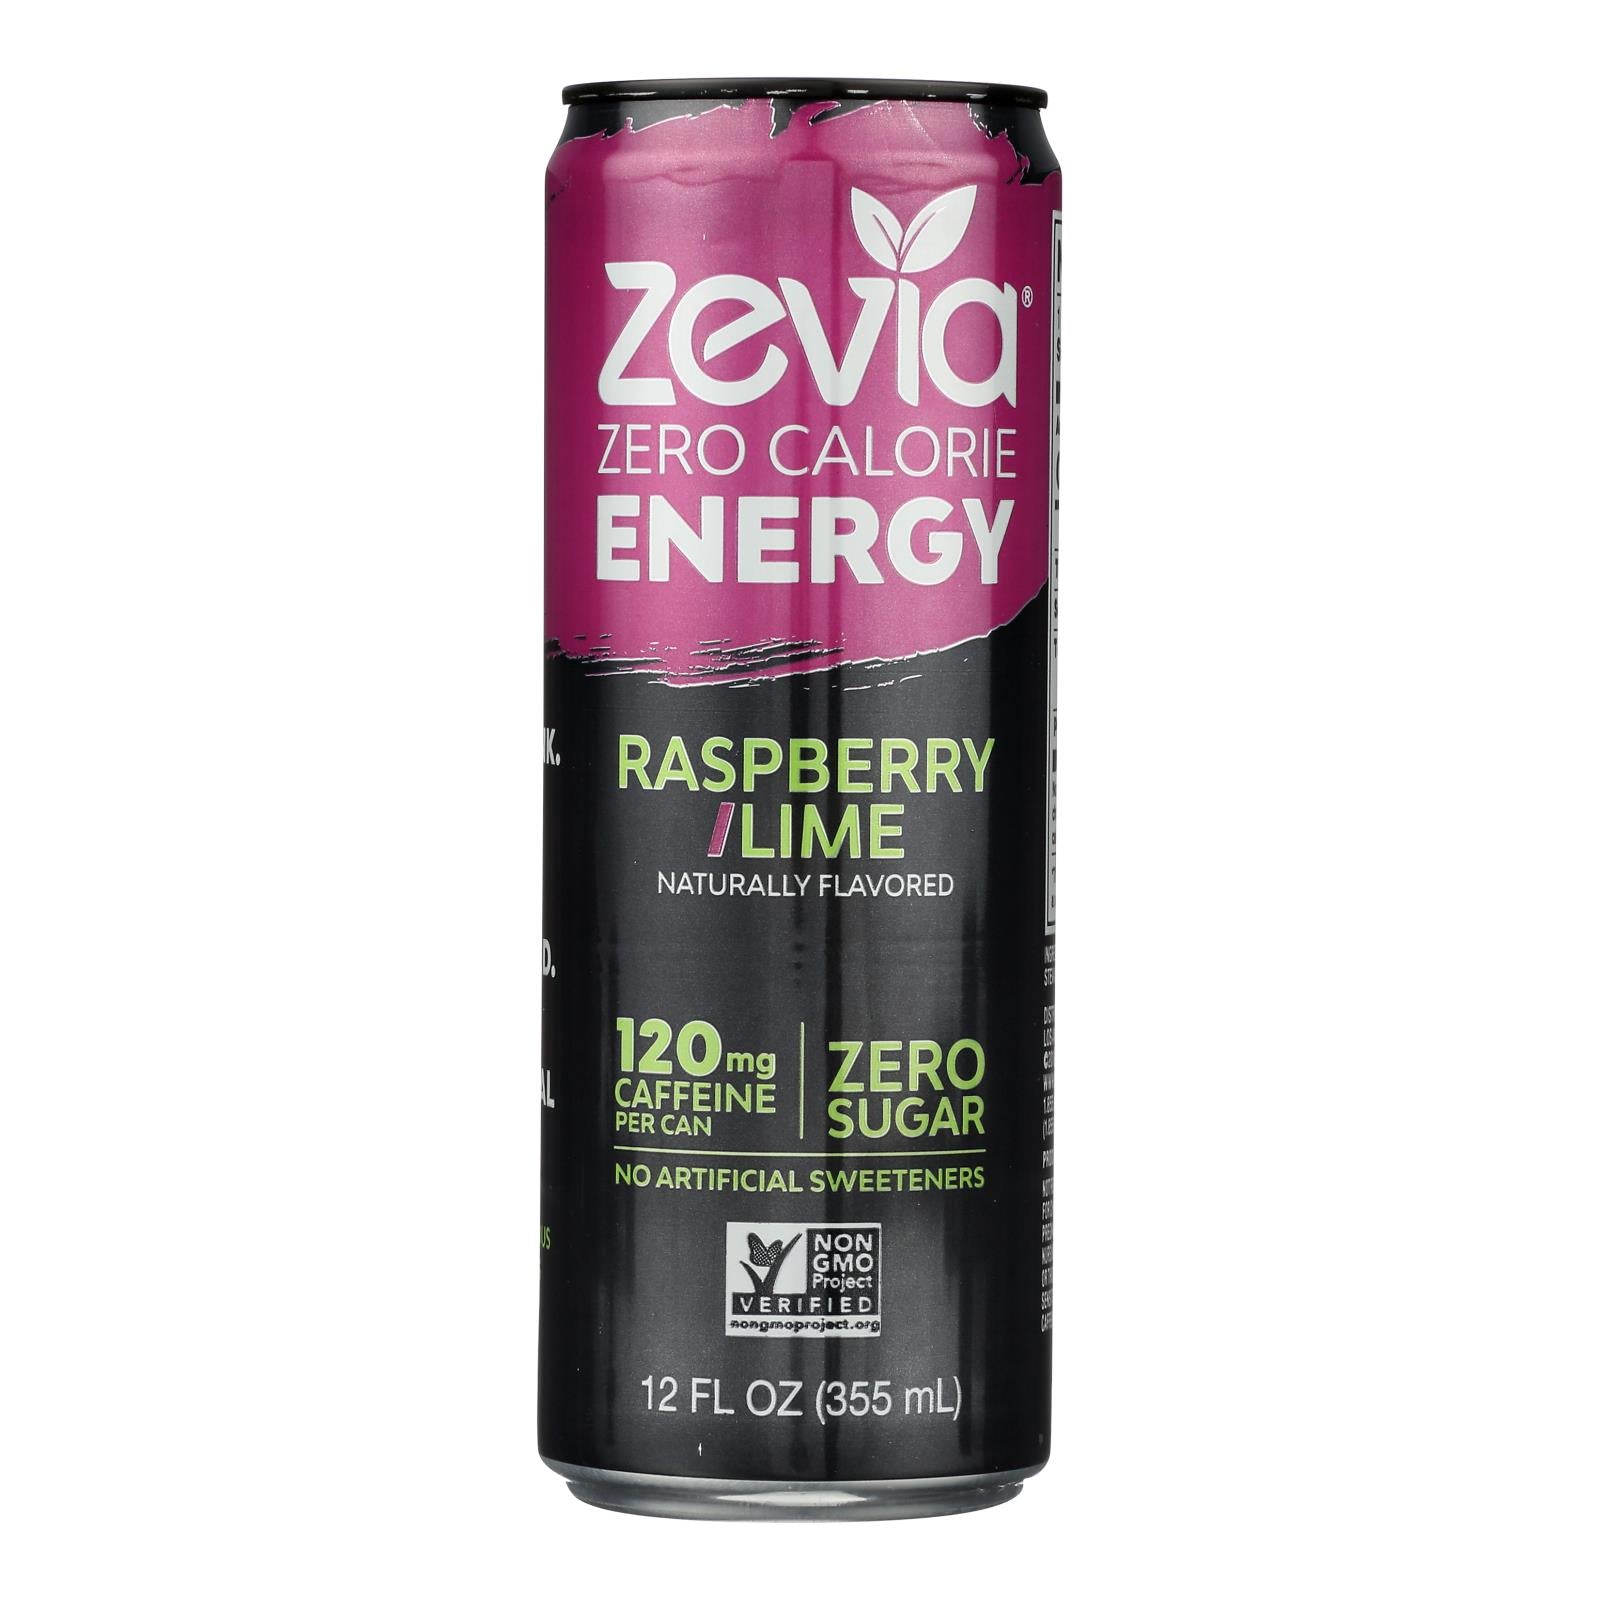 Zevia Zero Calorie Energy Drink - Raspberry/Lime - Case of 12 - 12 fl oz